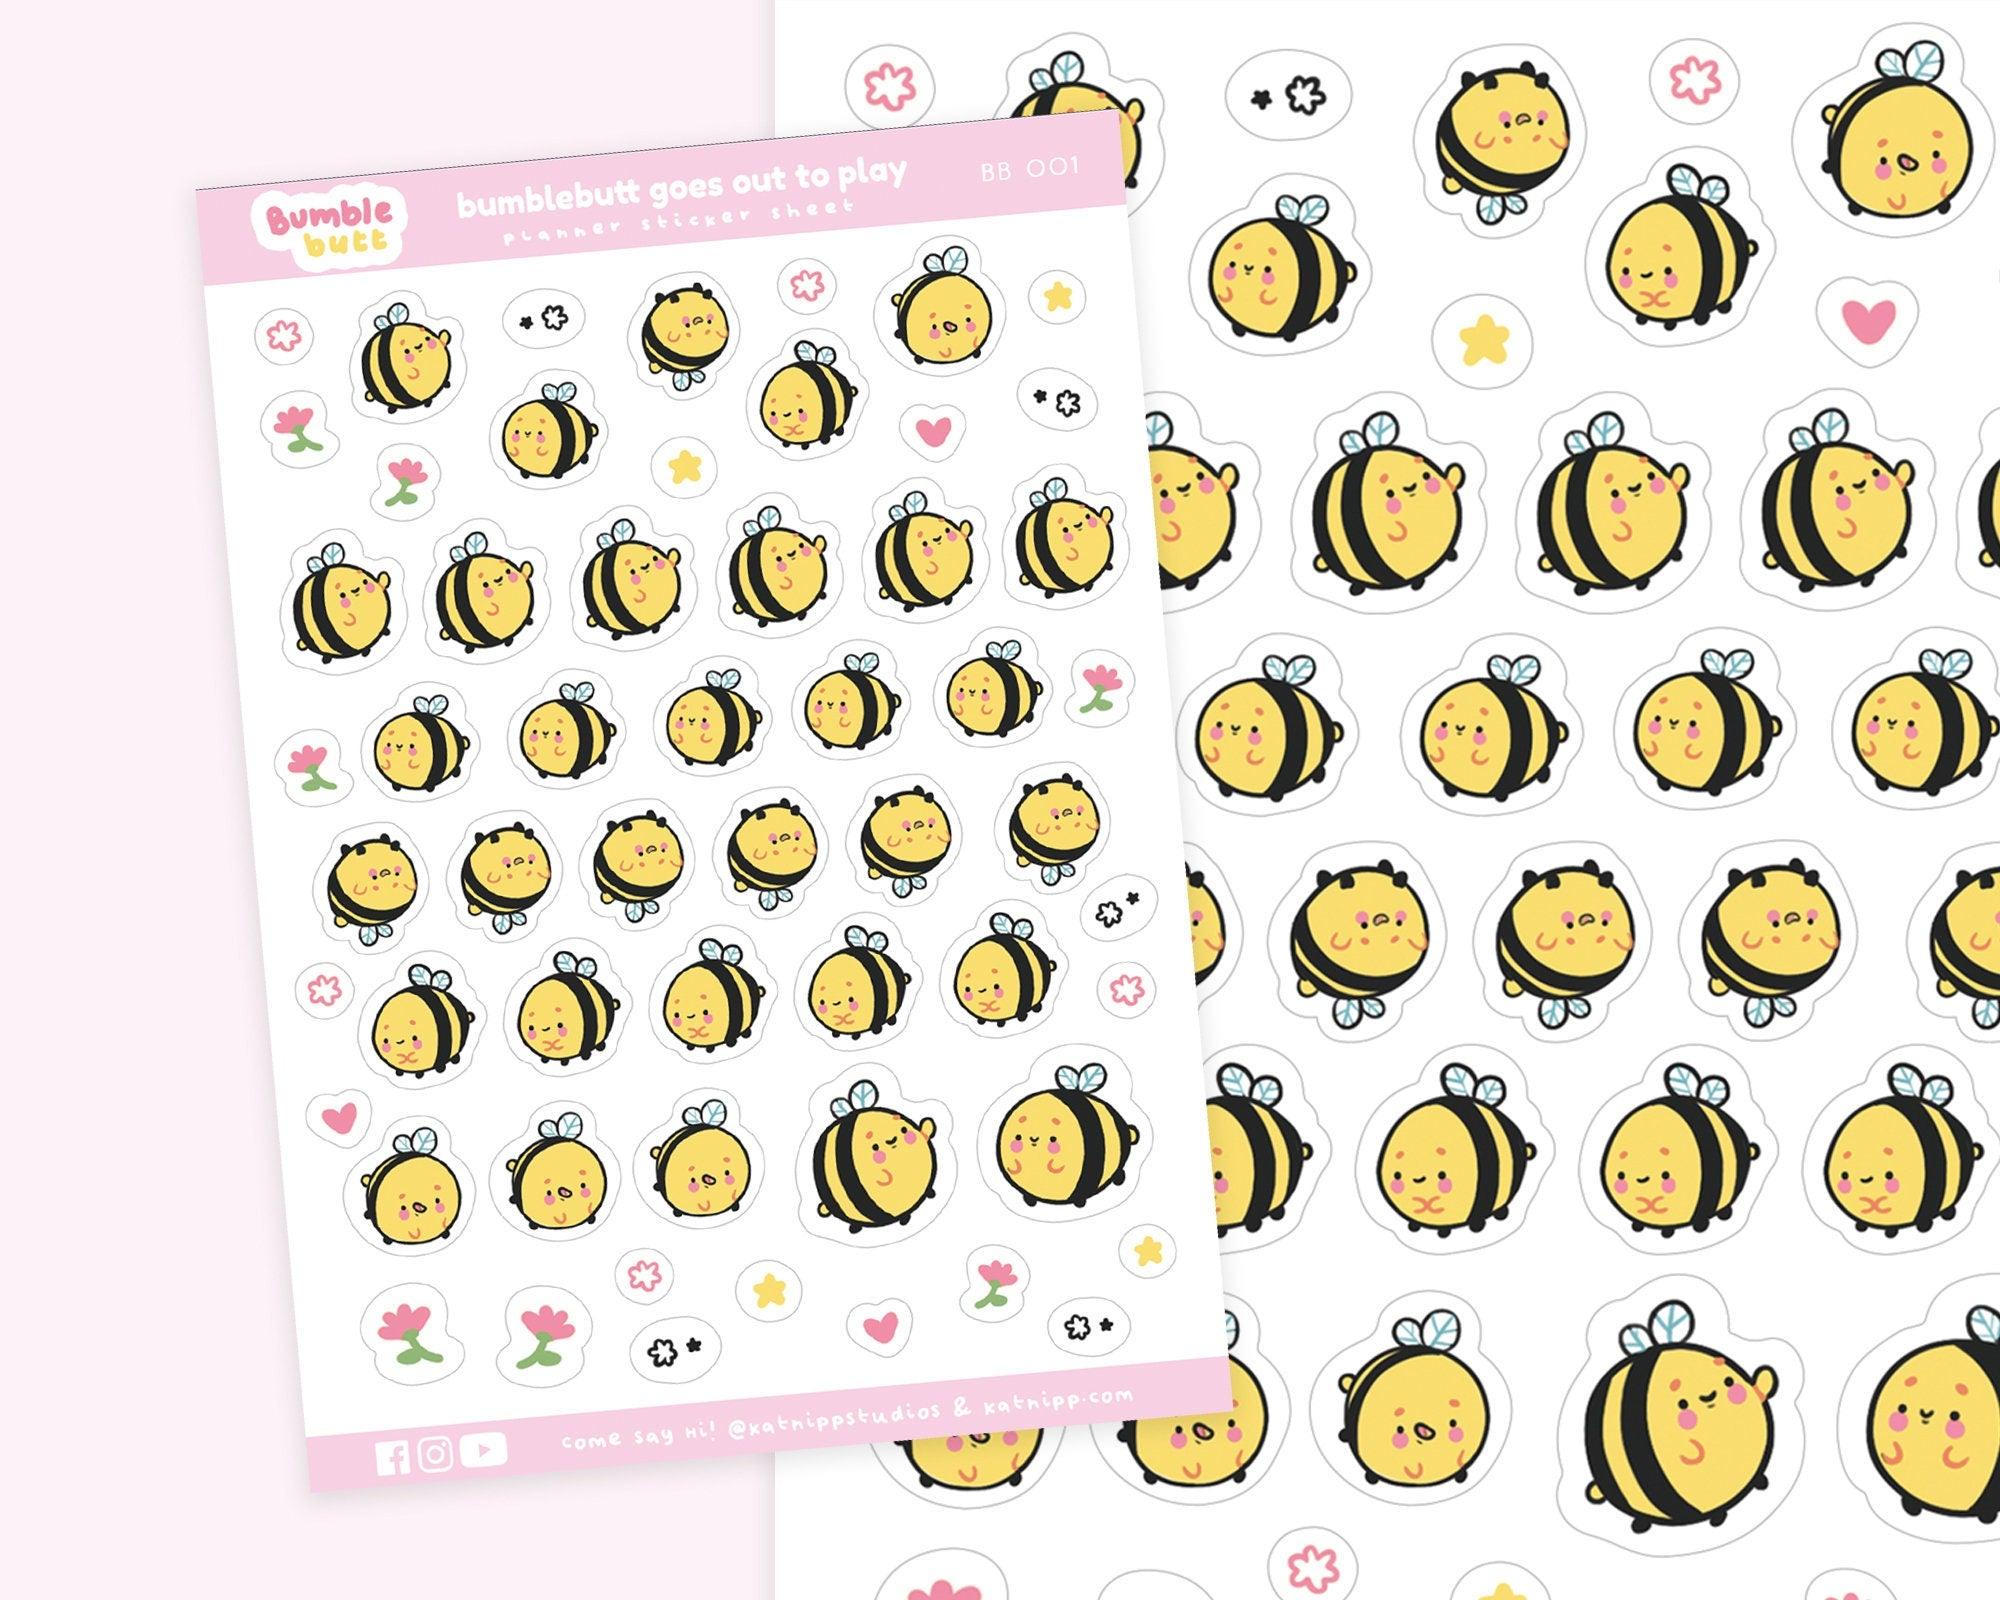 Adorable Bumblebutt Bumblebee Planner Stickers - Handmade originals for your planner.